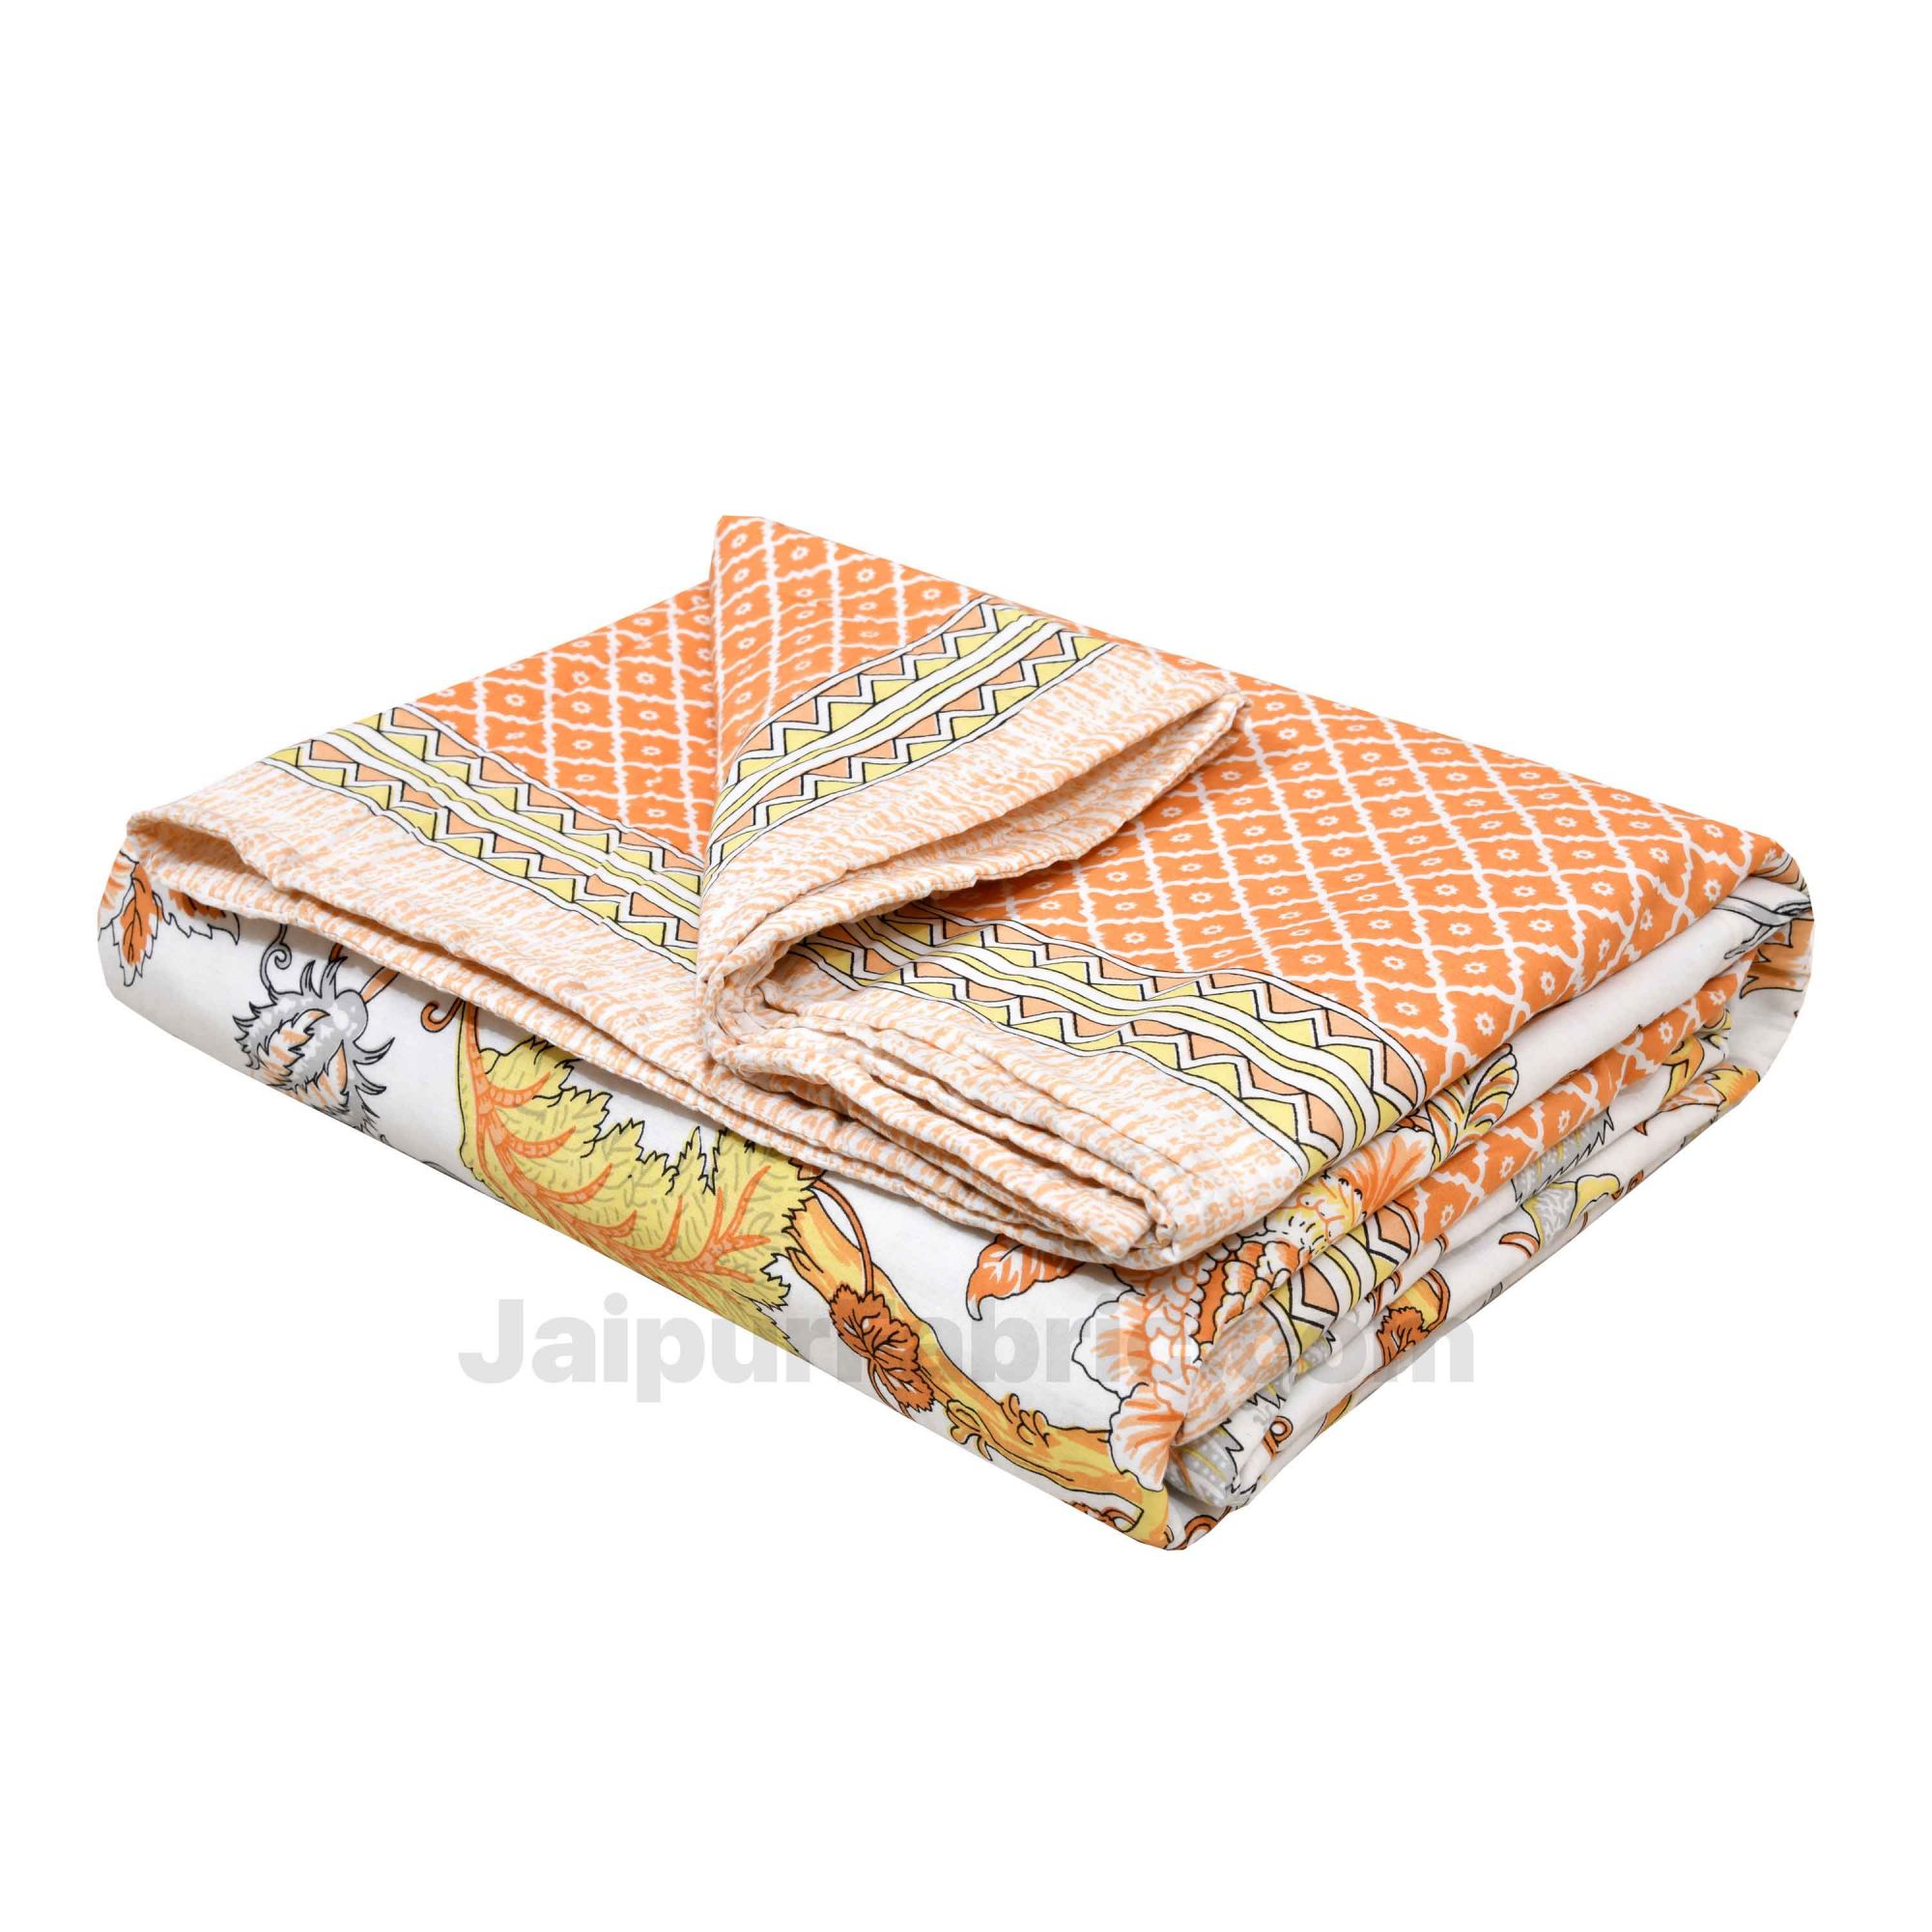 Lightweight Reversible Double Bed Dohar Orange Gala FlowerSkin Friendly Pure Cotton MulMul Blanket / AC Comforter / Summer Quilt